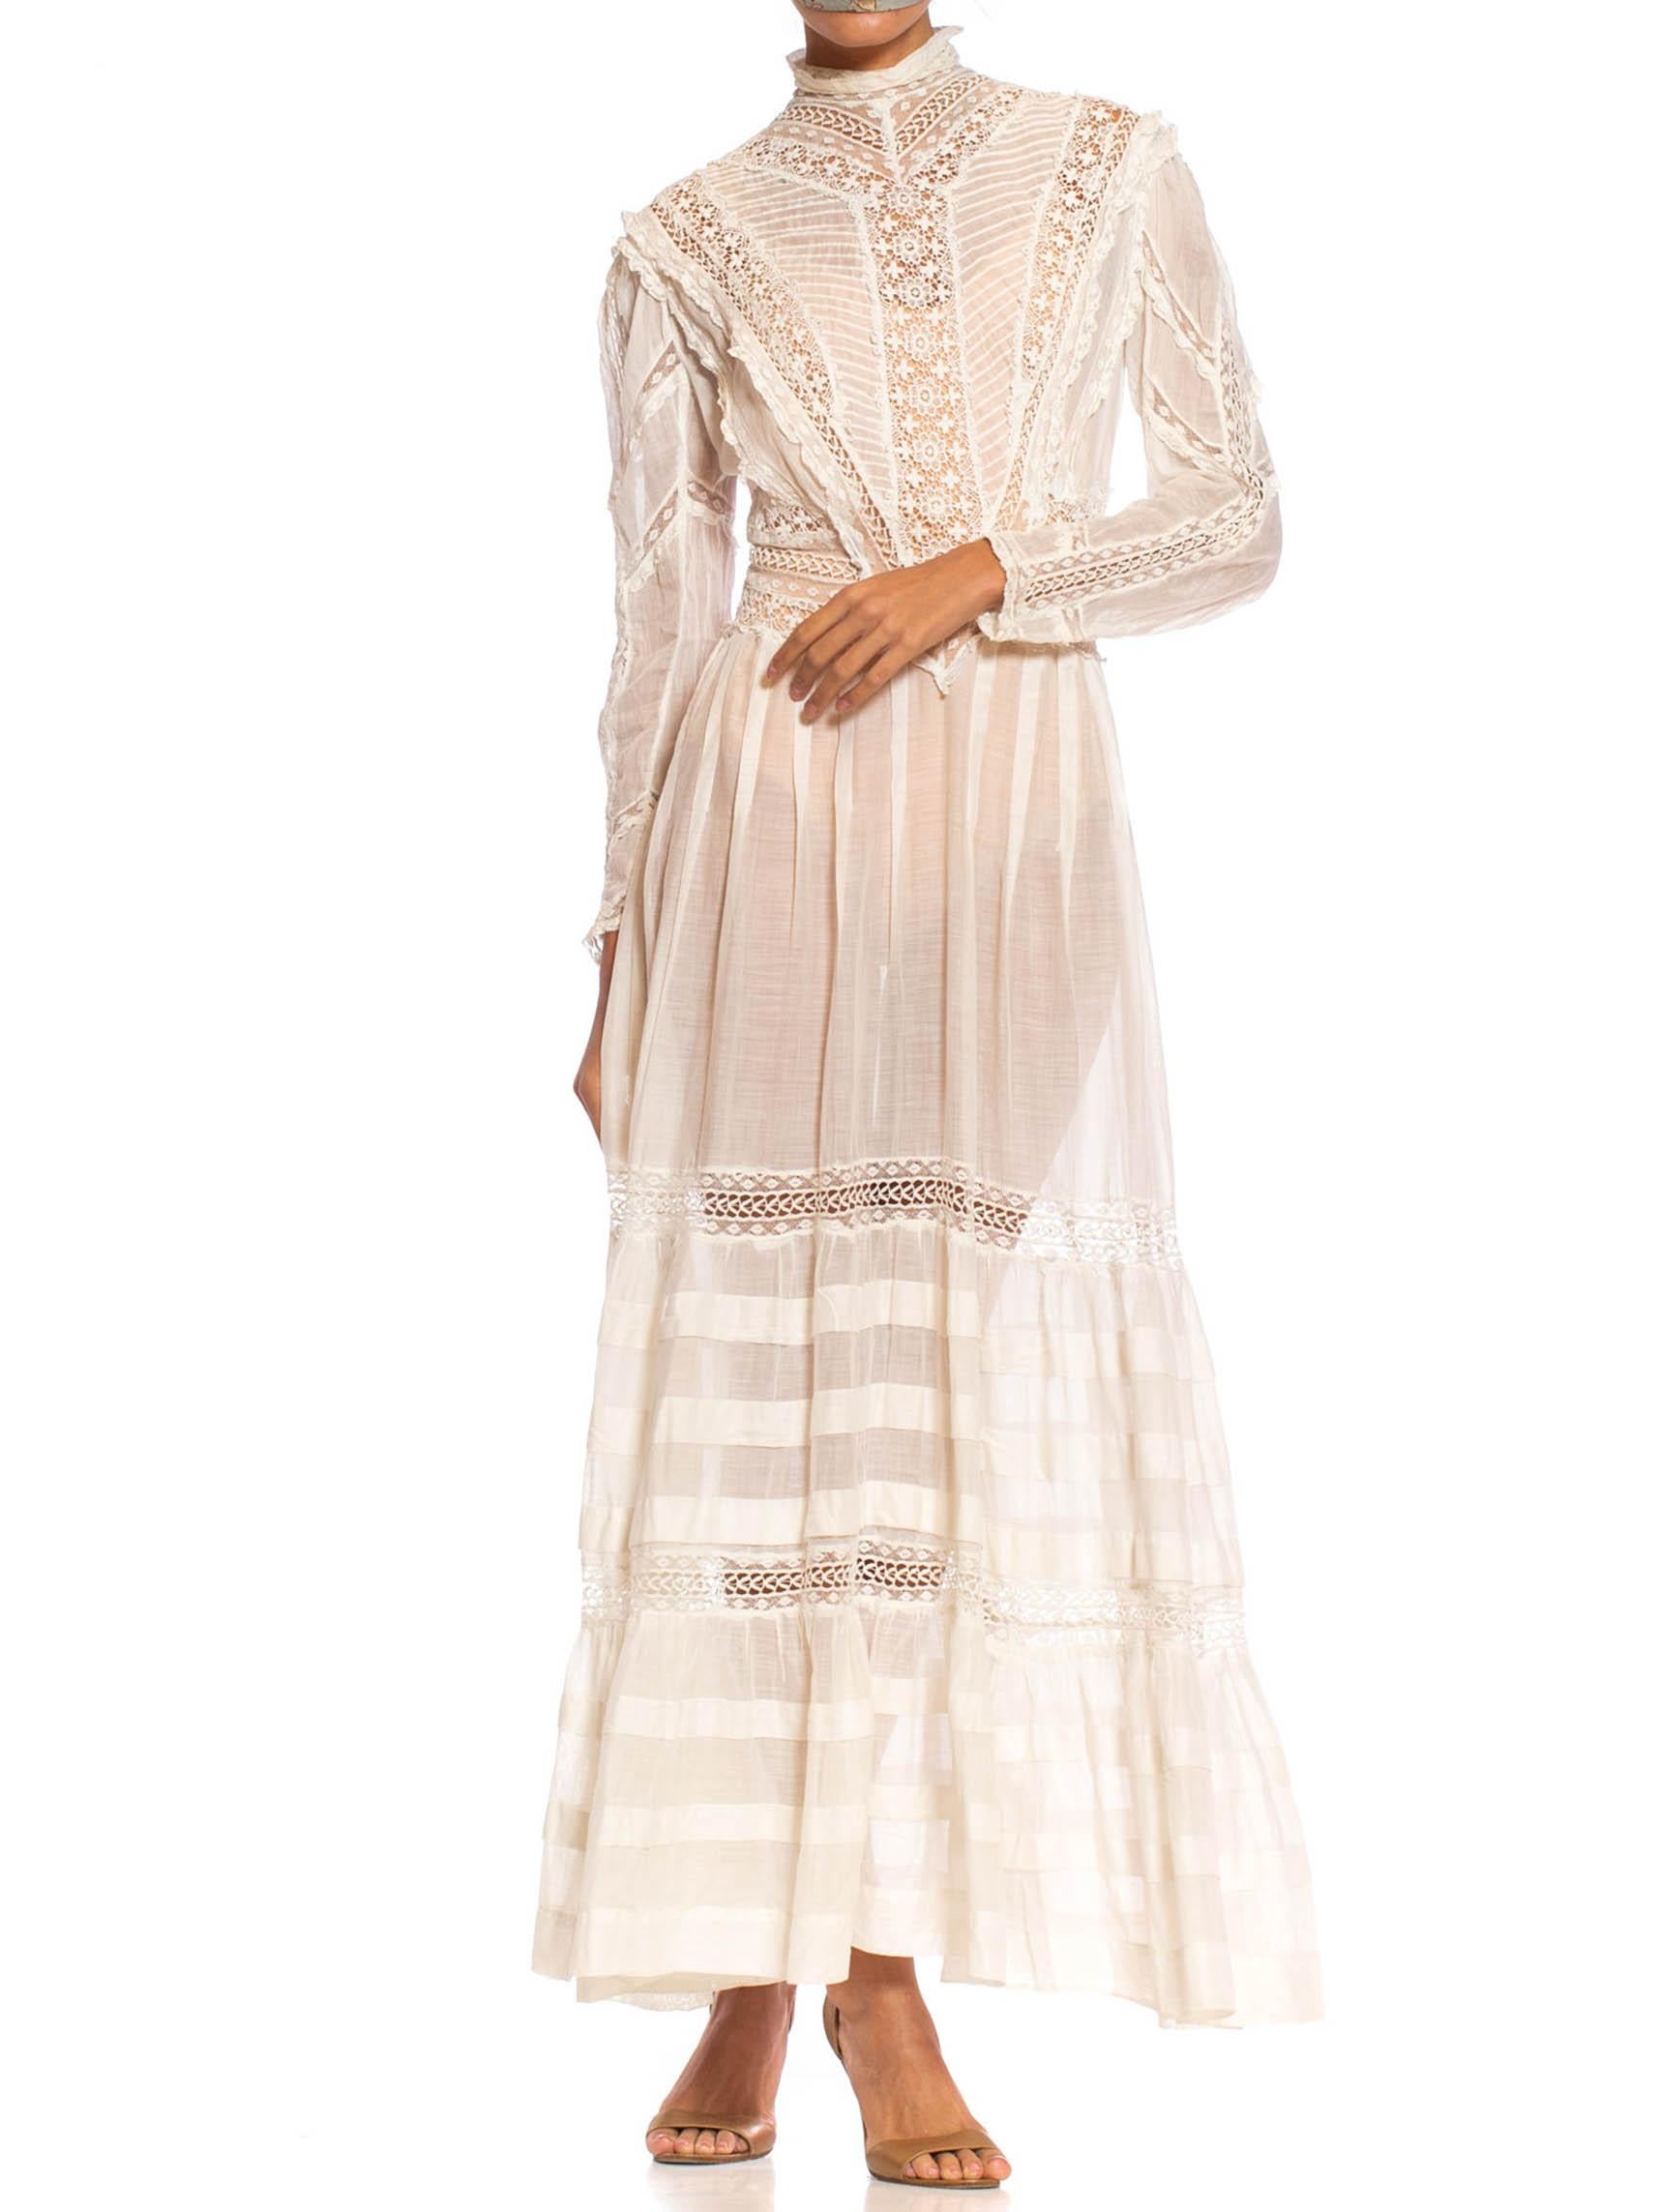 Edwardian White Cotton Voile & Lace Swan Neck Ruffled Long Sleeve Tea Dress 4